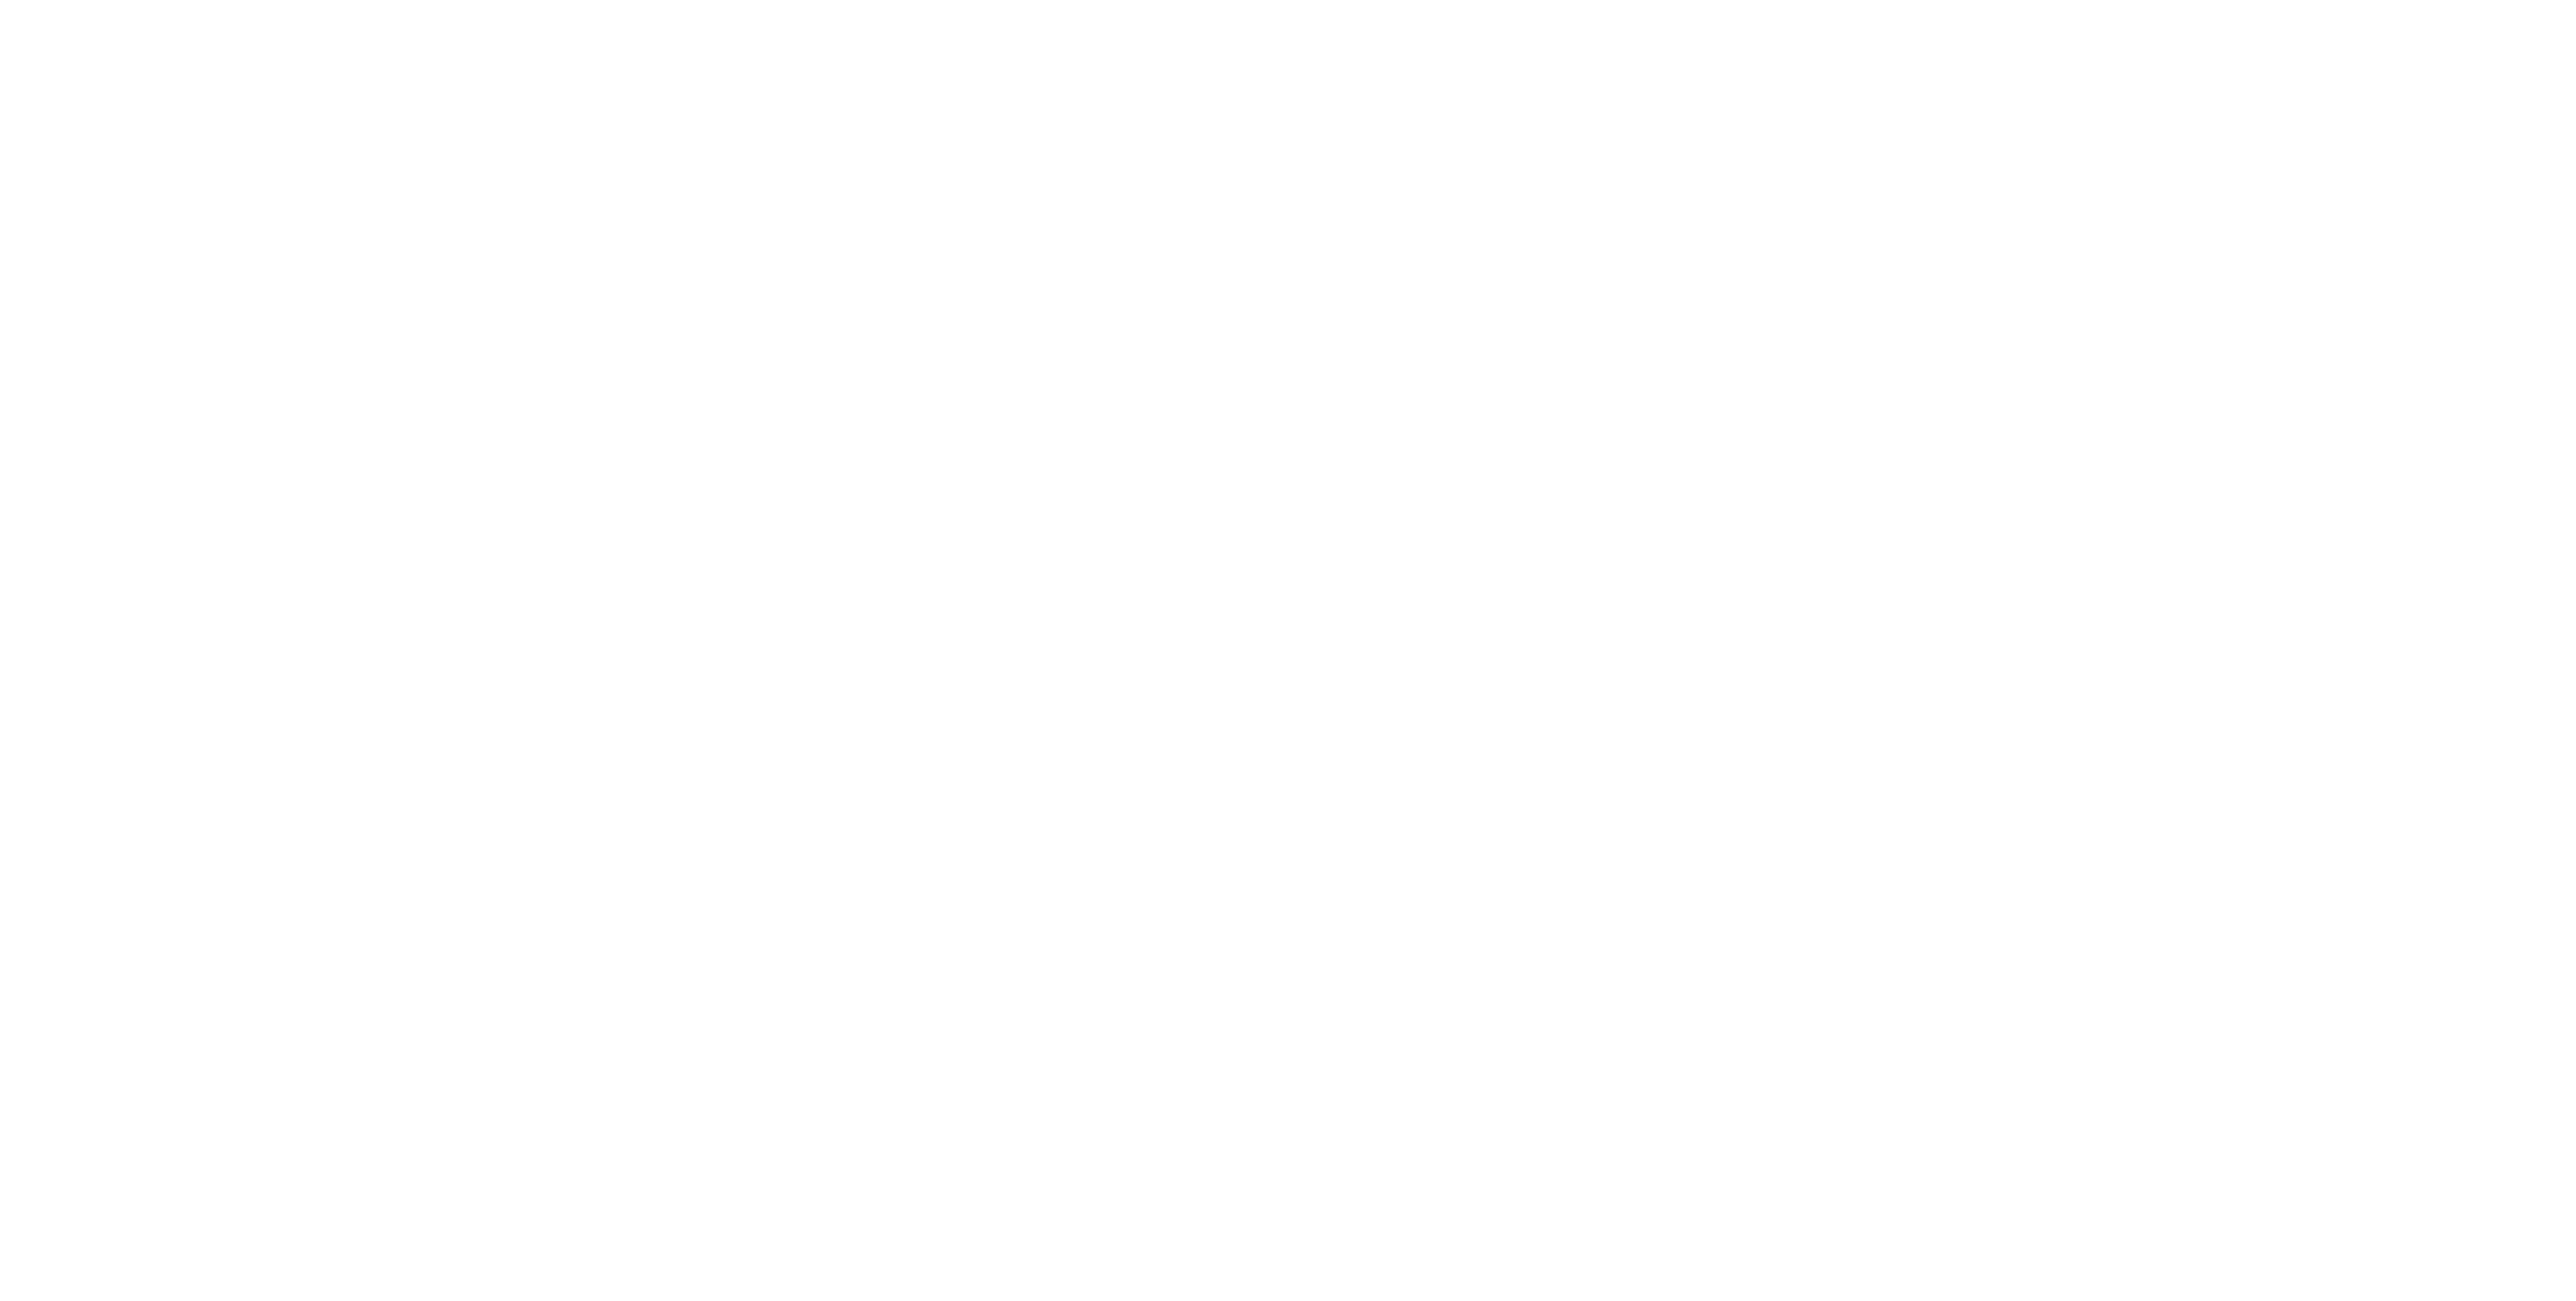 Sloane Web Services